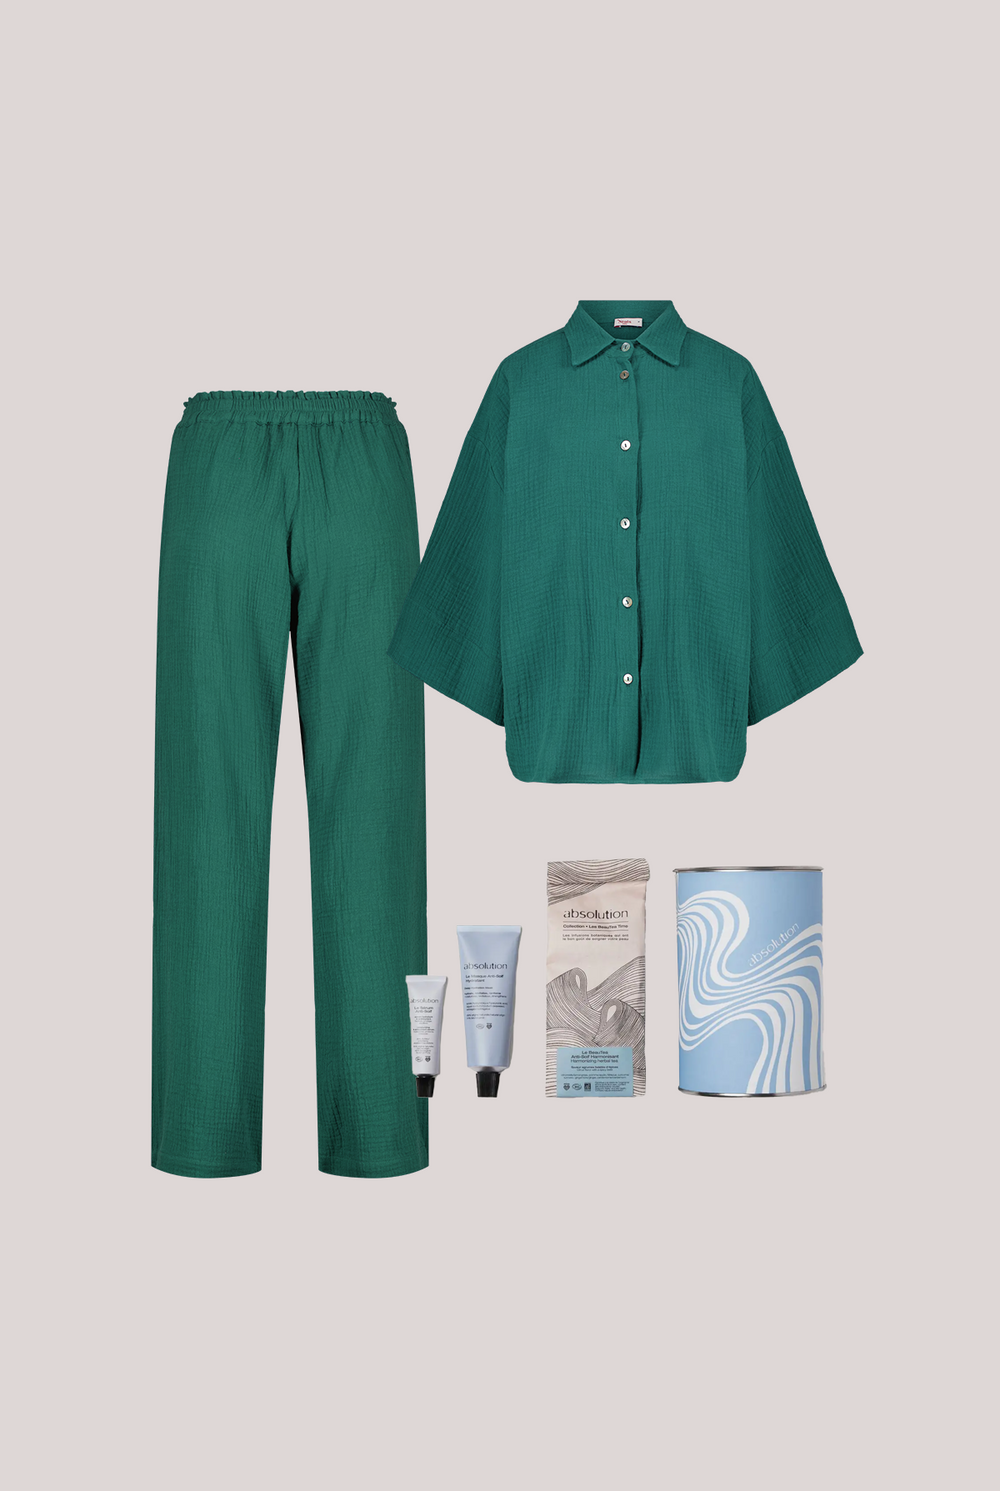 Cocooning Box - Pine Green Mimosa Pajamas + Absolution Kit 